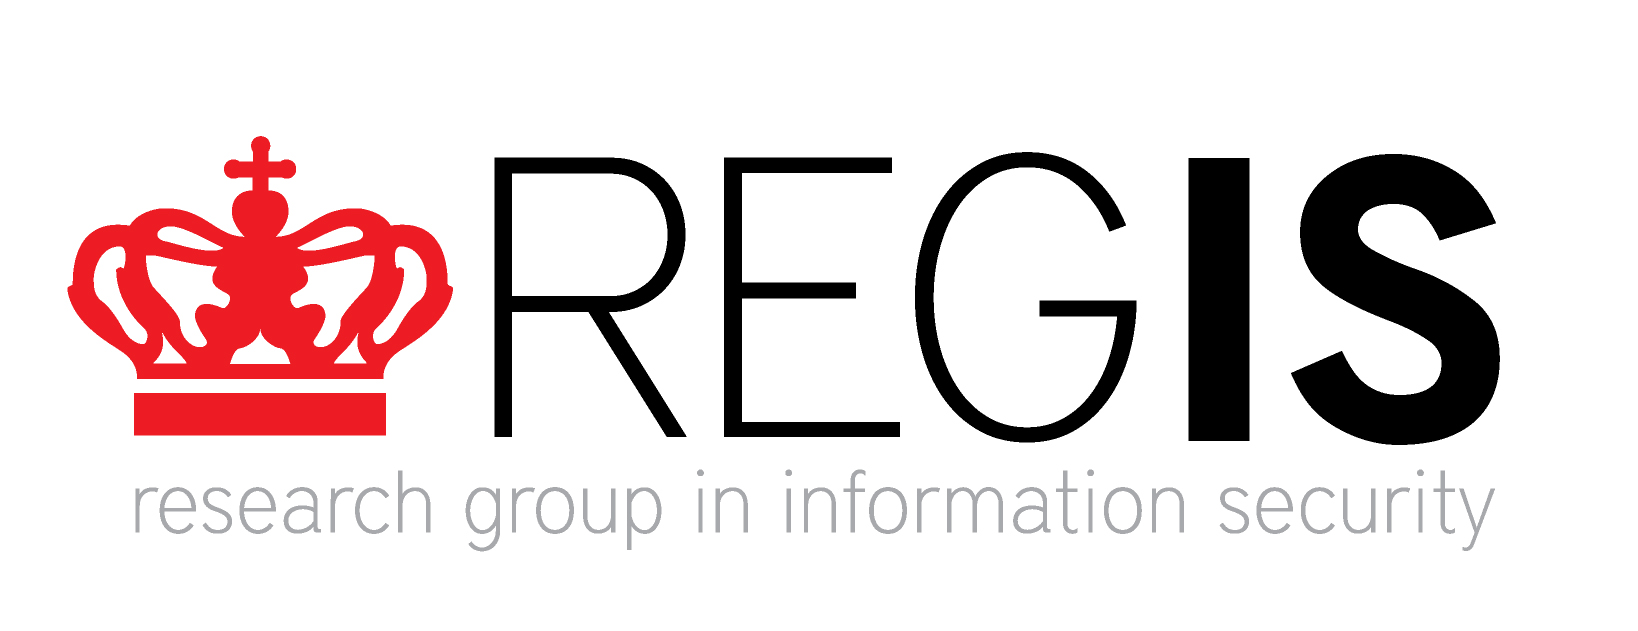 Logo REGIS